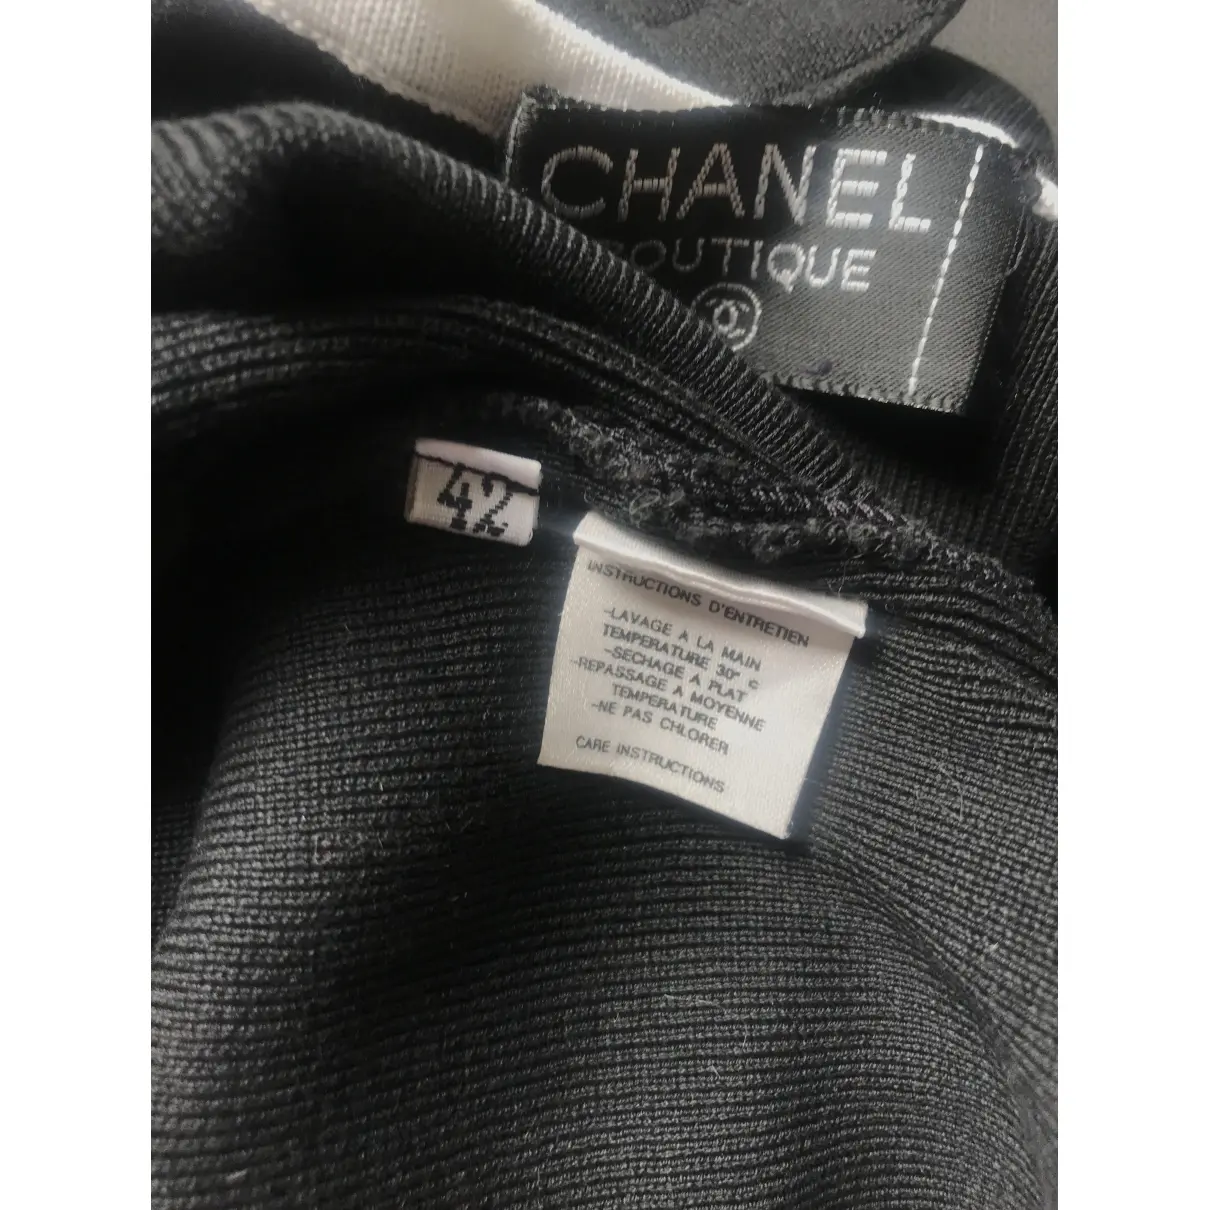 Buy Chanel Black Cotton Top online - Vintage